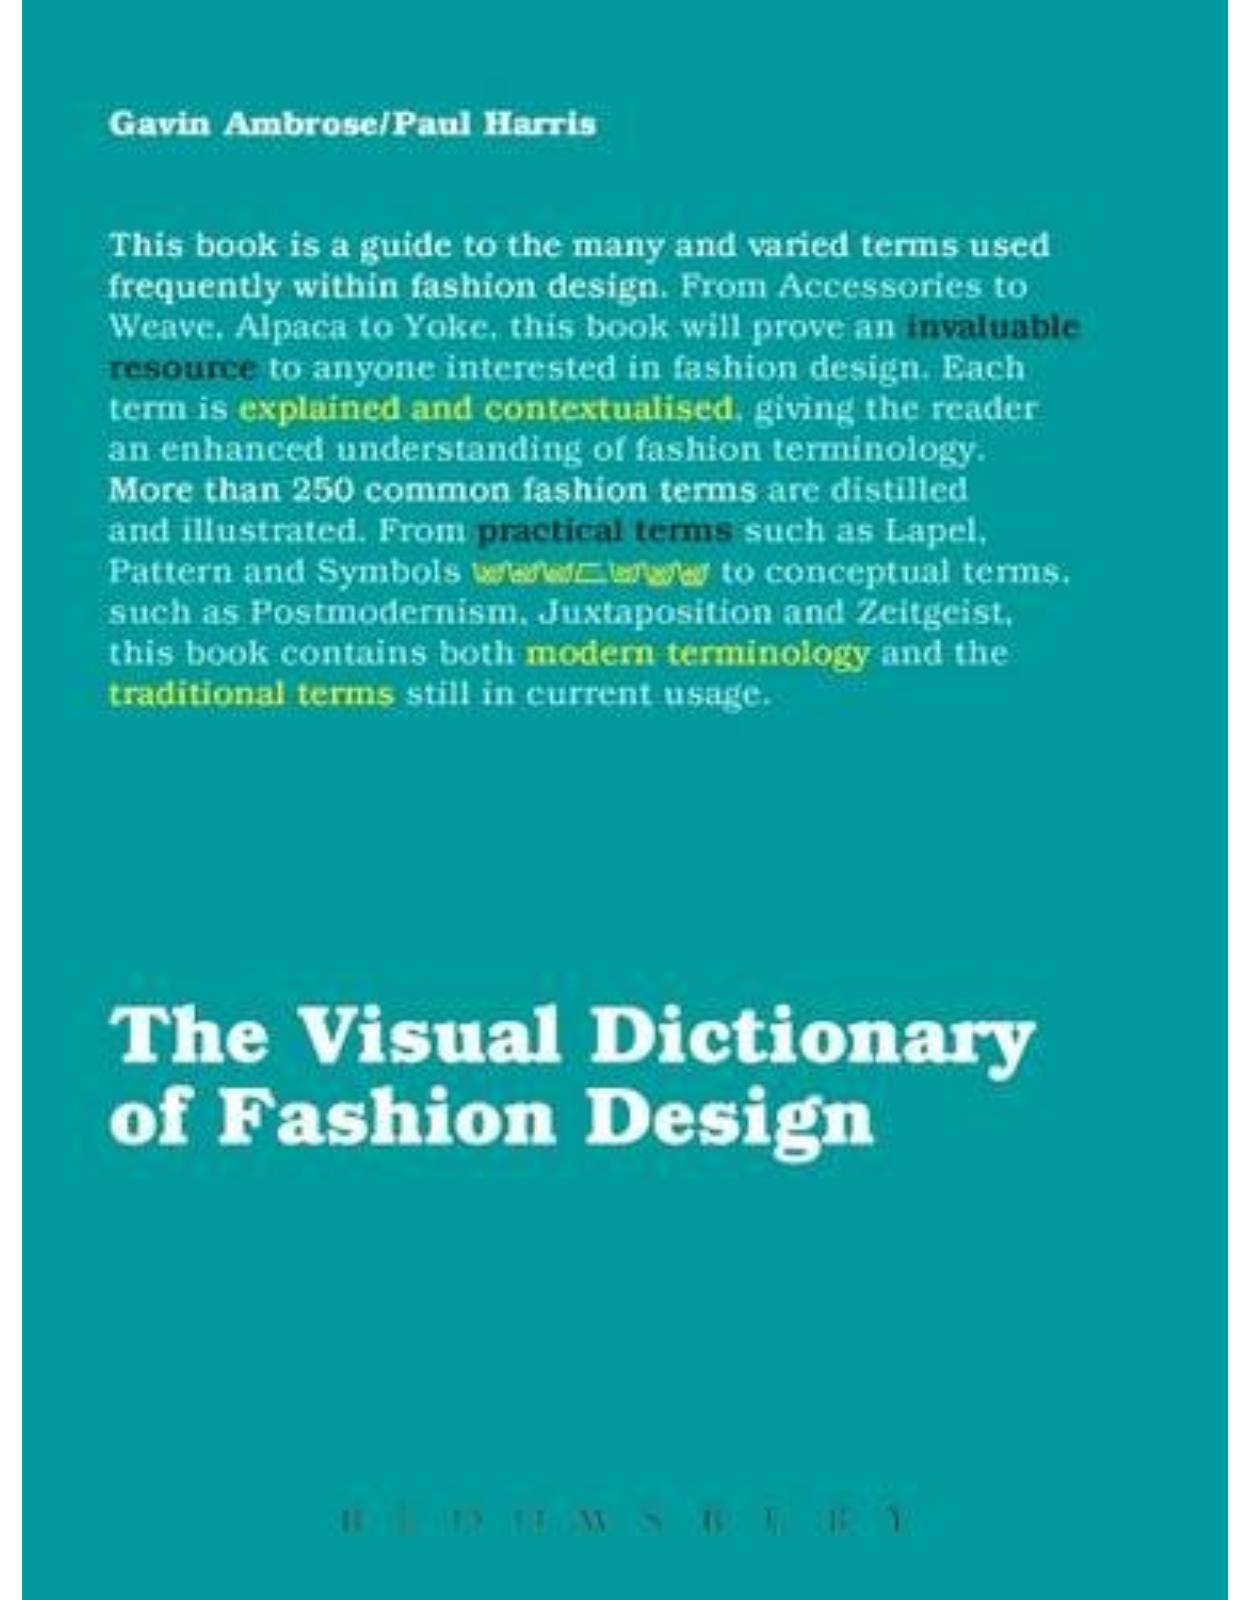 Visual Dictionary of Fashion Design